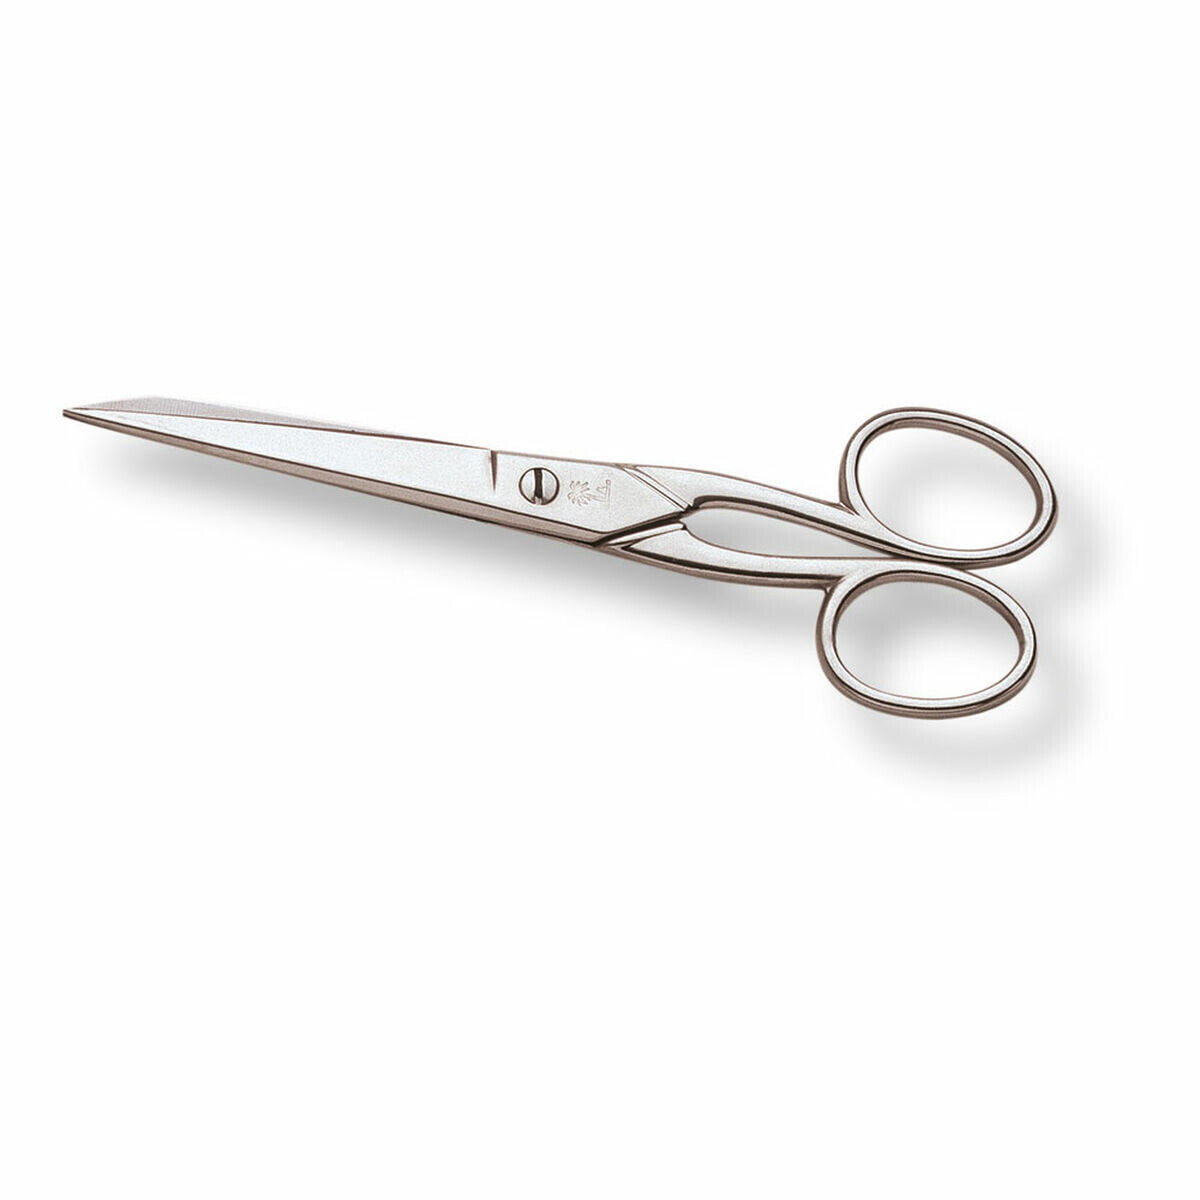 Sewing Scissors Palmera Europa 08221200 127 mm 5